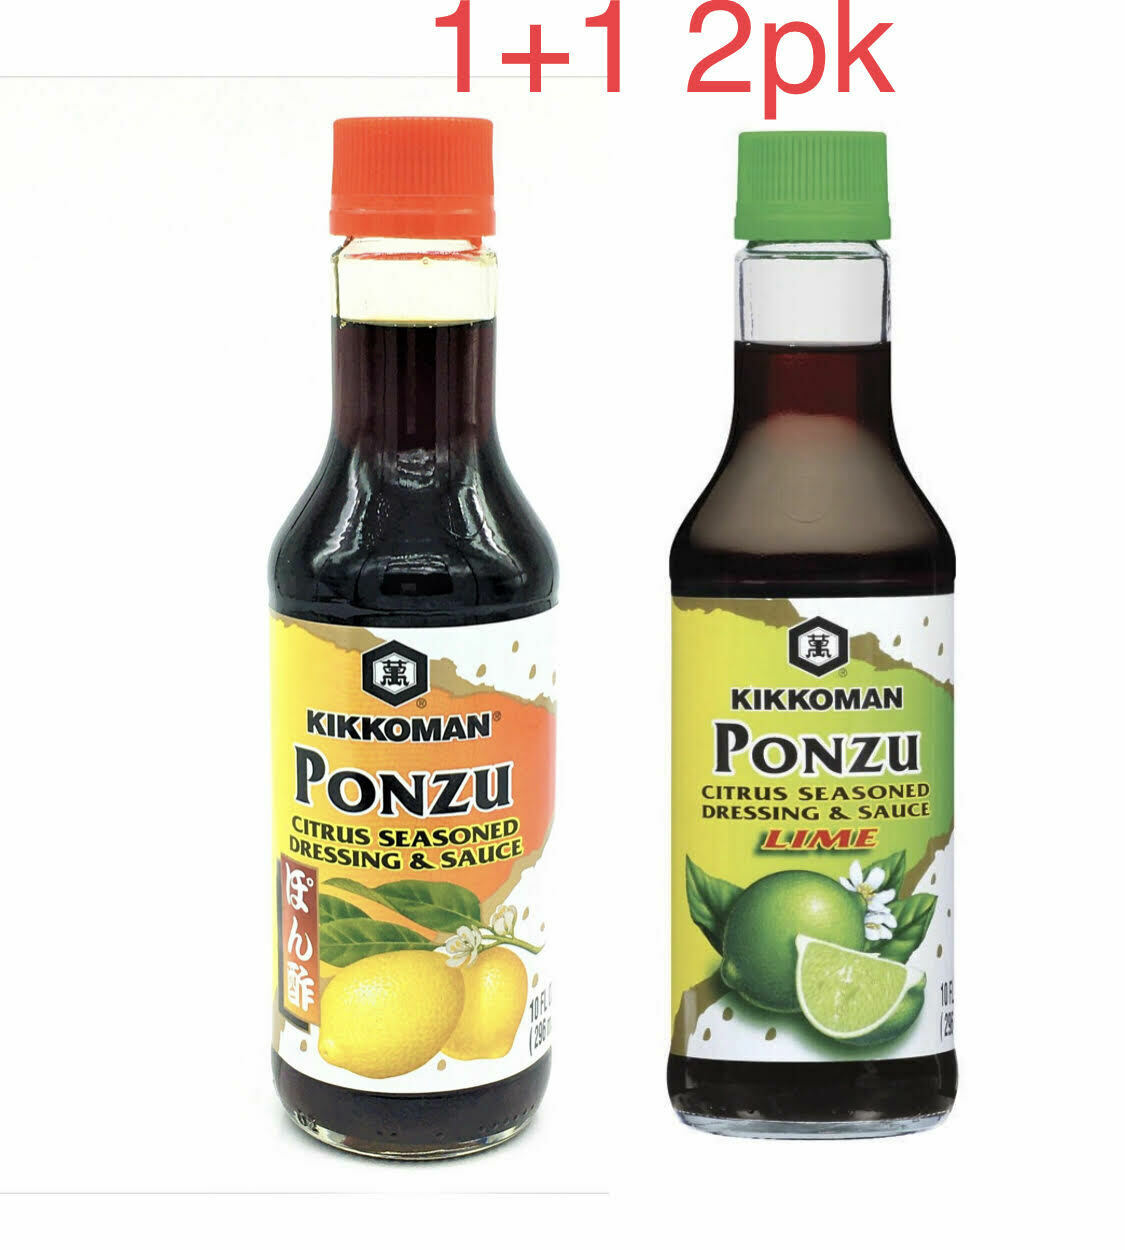 Kikkoman Ponzu (Lime) Citrus Seasoned Dressing & Sauce 10 oz (pack of 2)